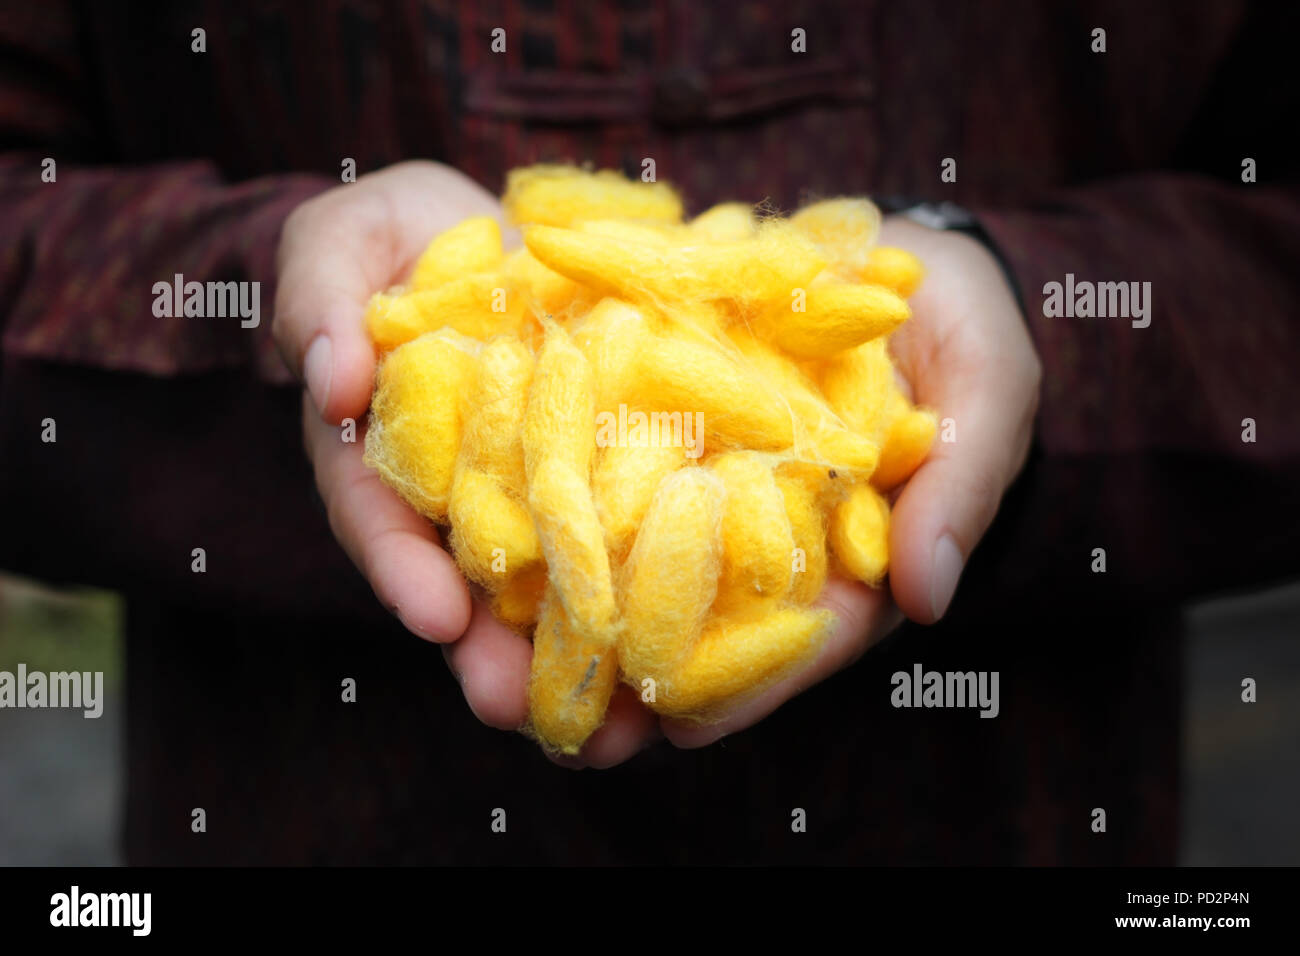 chrysalis yellow silkworm cocoons in man hands Stock Photo